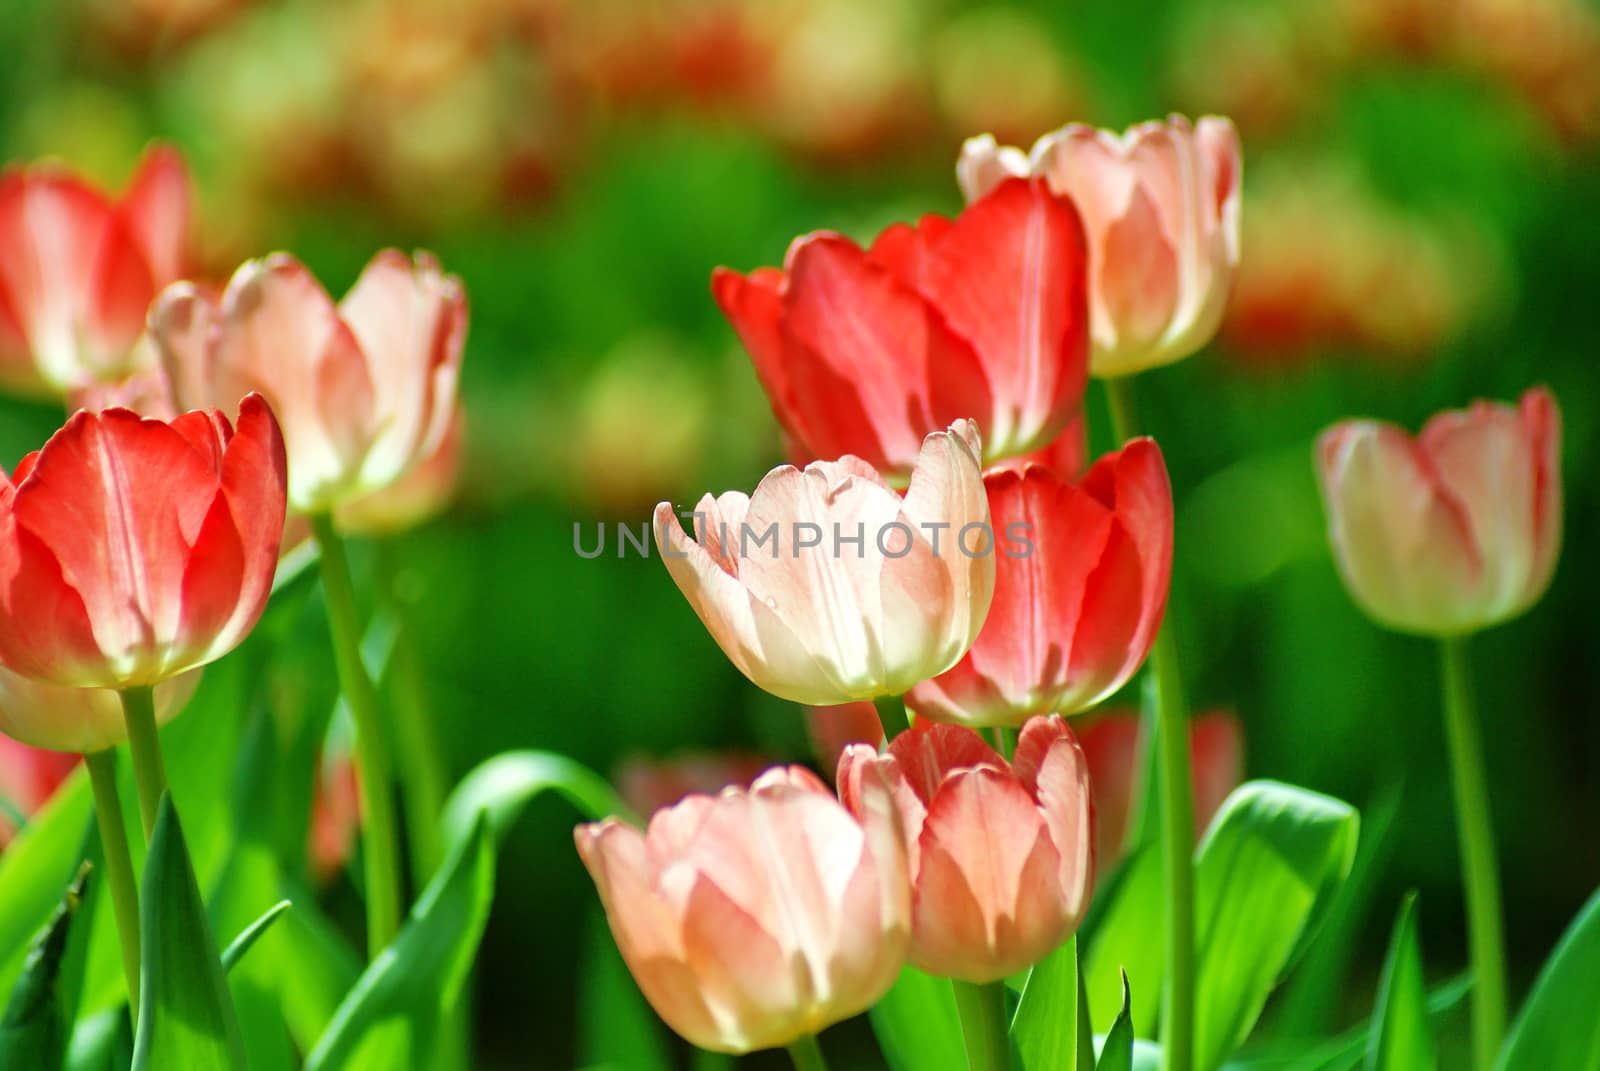 Beautiful flower of tulip in sunlight on blur background